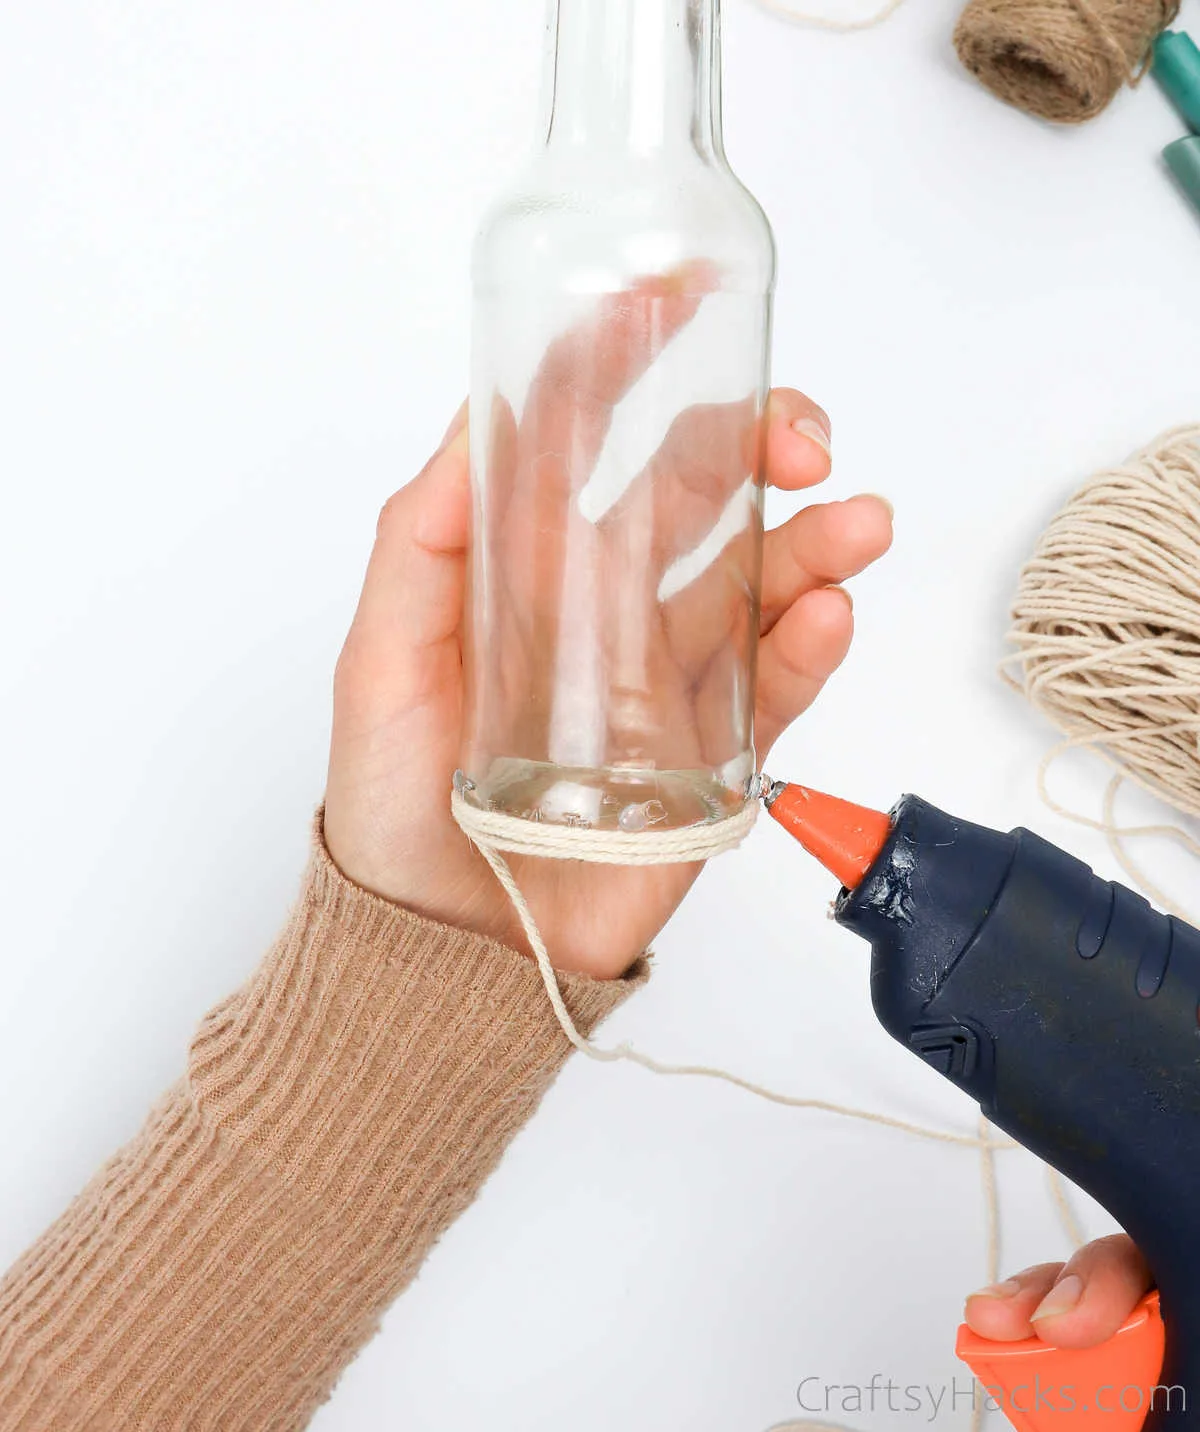 glueing string to bottle